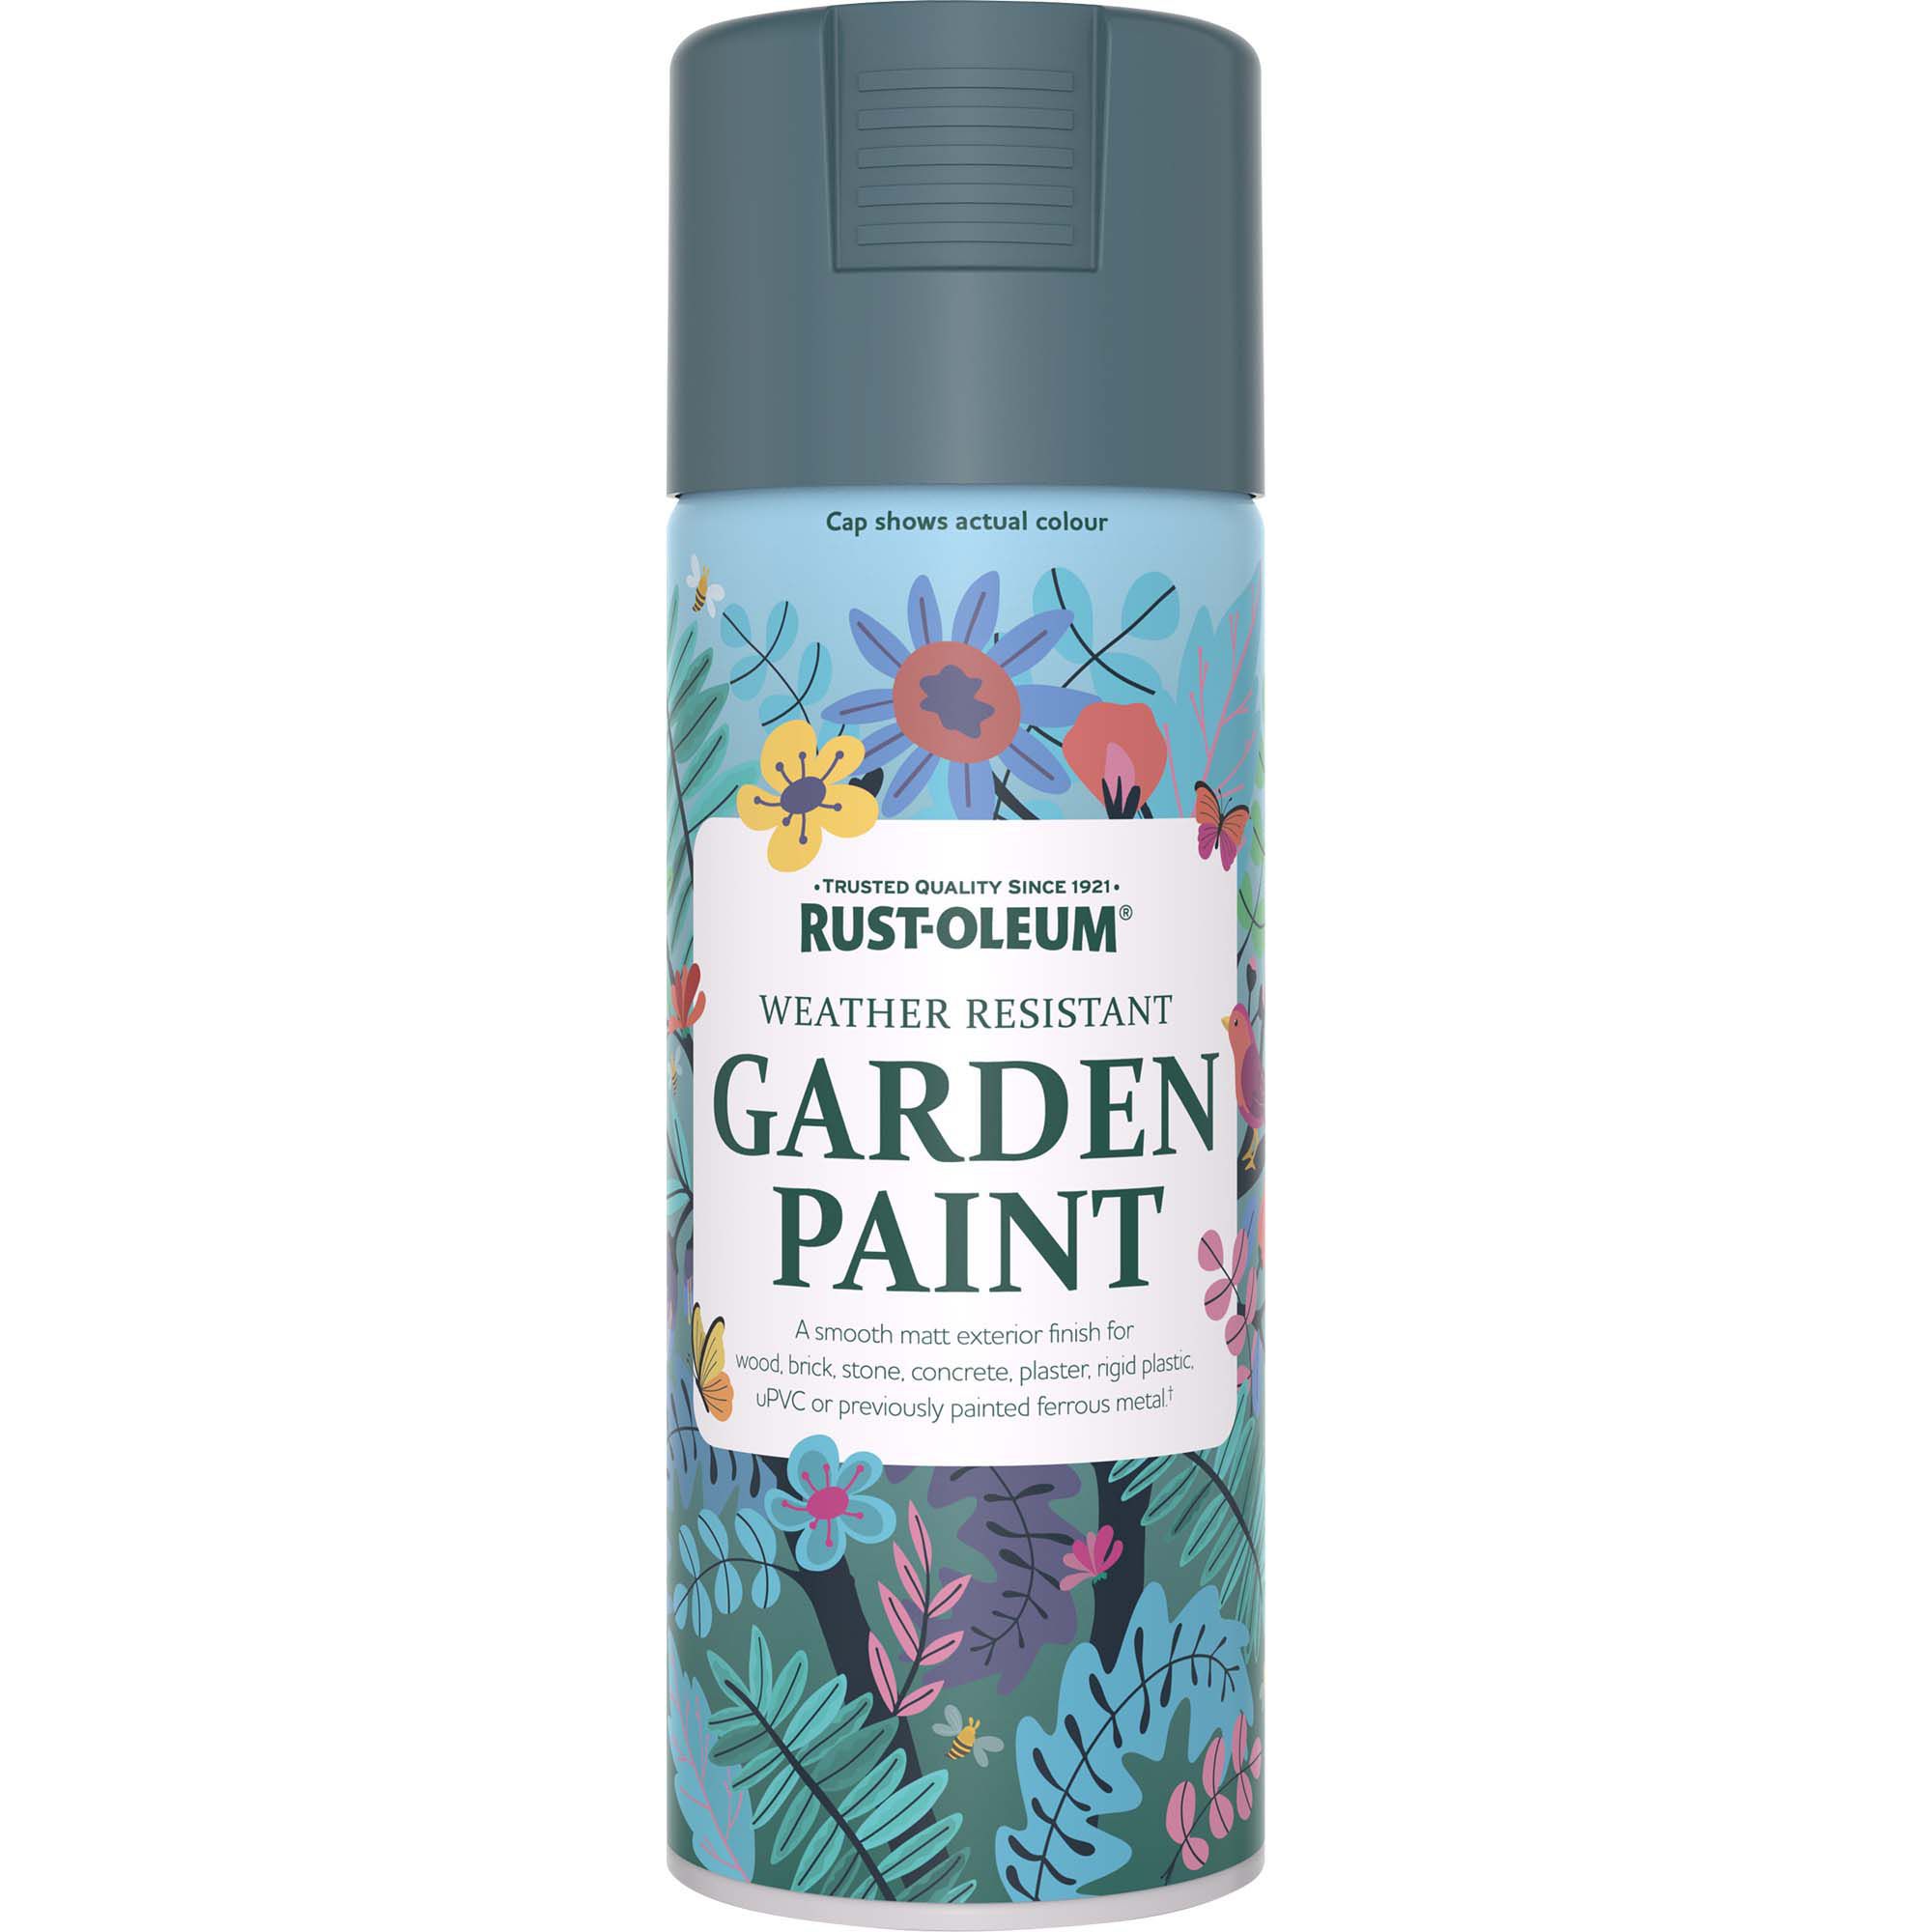 Rust-Oleum Garden Paint Pacific State Matt Multi-surface Garden Paint, 400ml Spray can